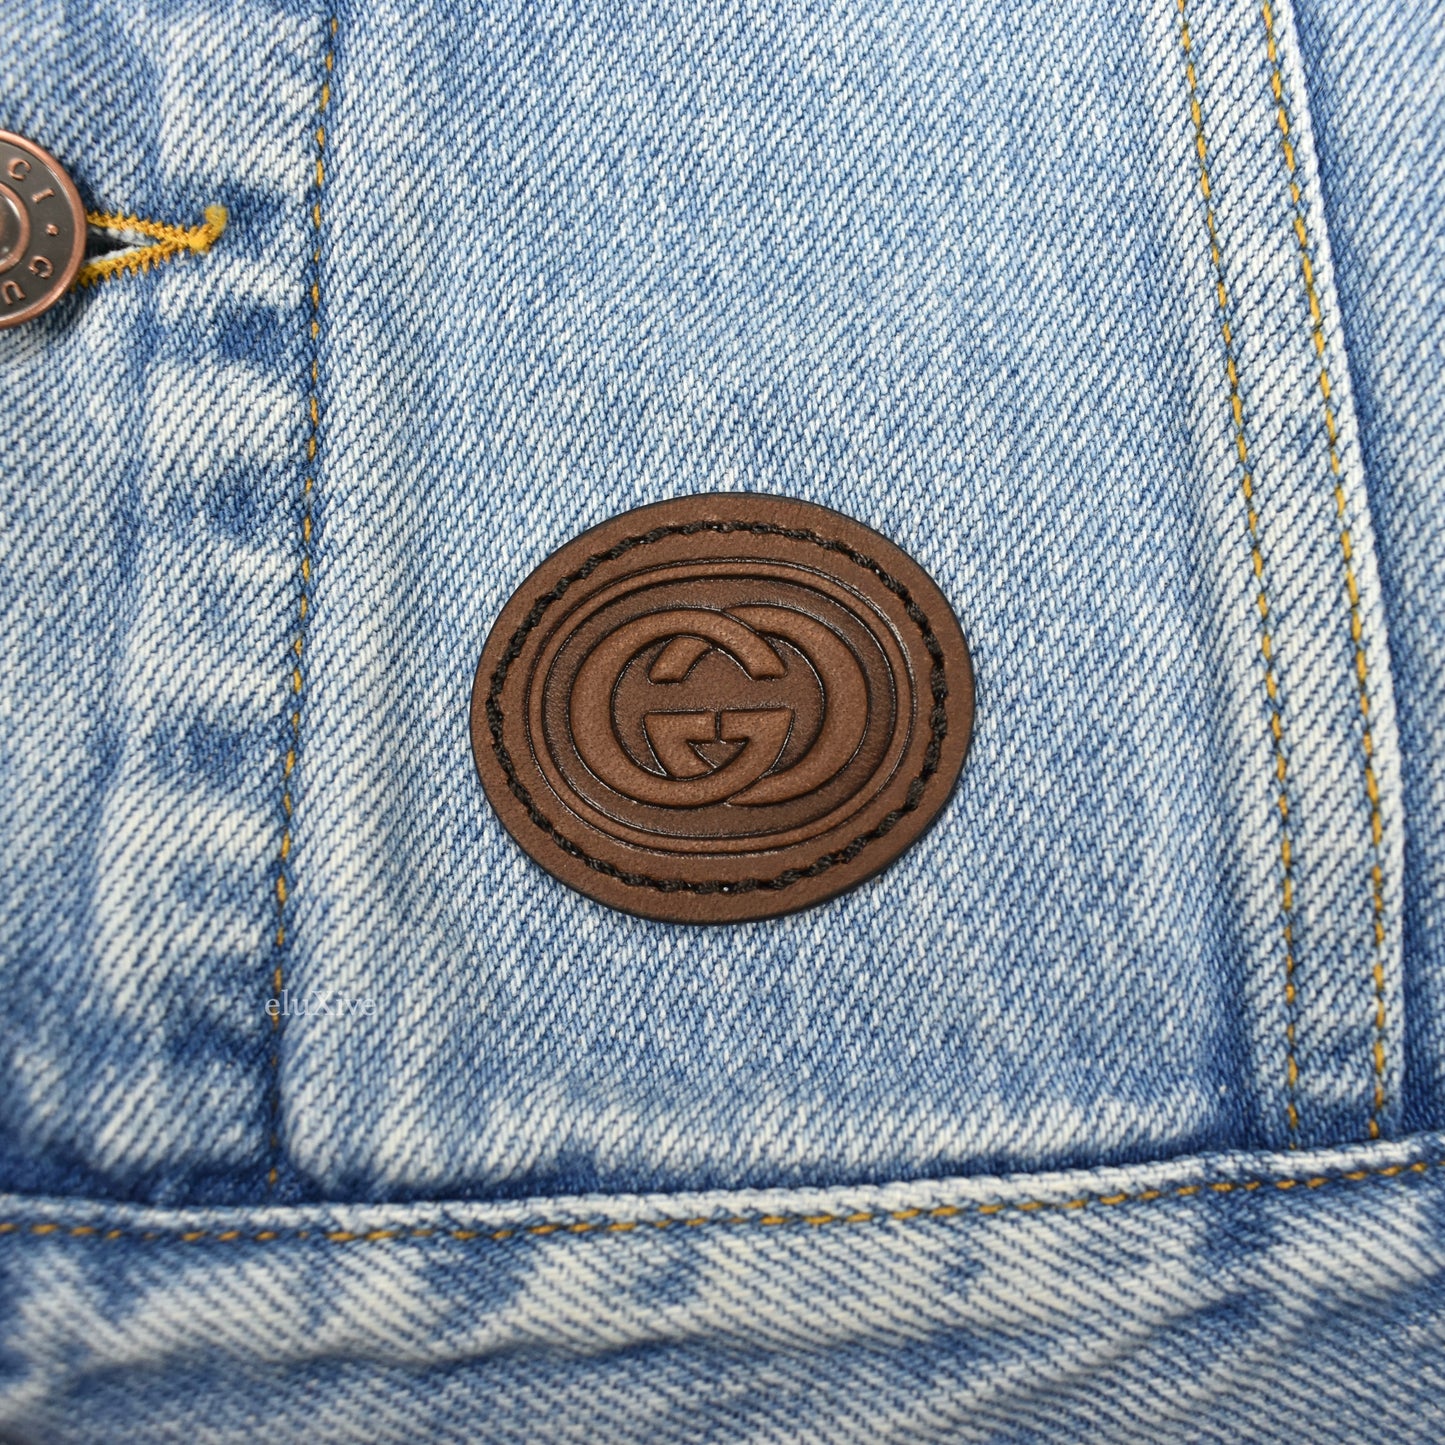 Gucci - Stone Bleached Denim Leather Logo Vest